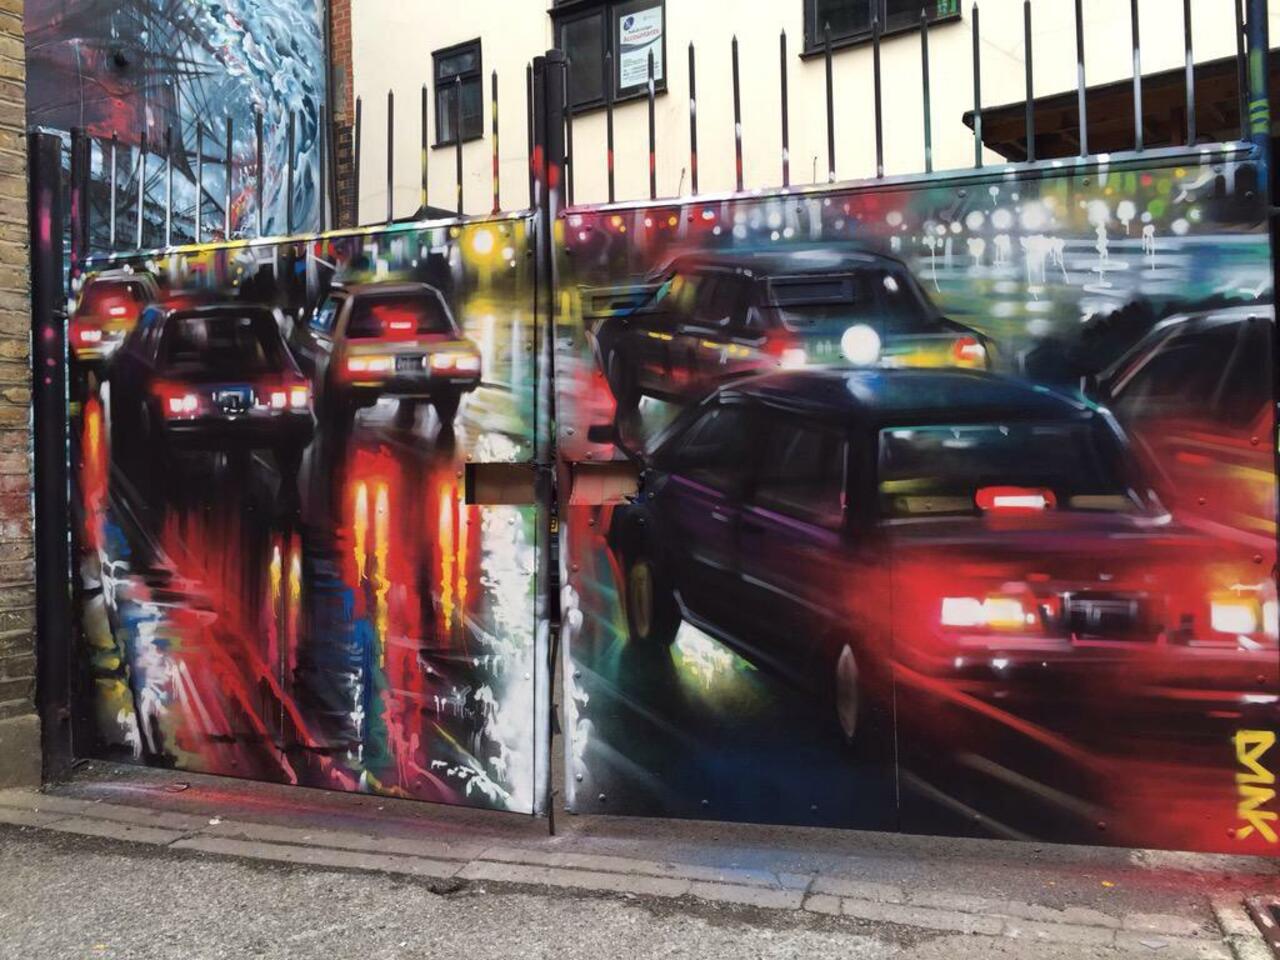 New Street Art by DanKitchener in Brick Lane London 

#art #graffiti #mural #streetart http://t.co/17aqaTAeEh